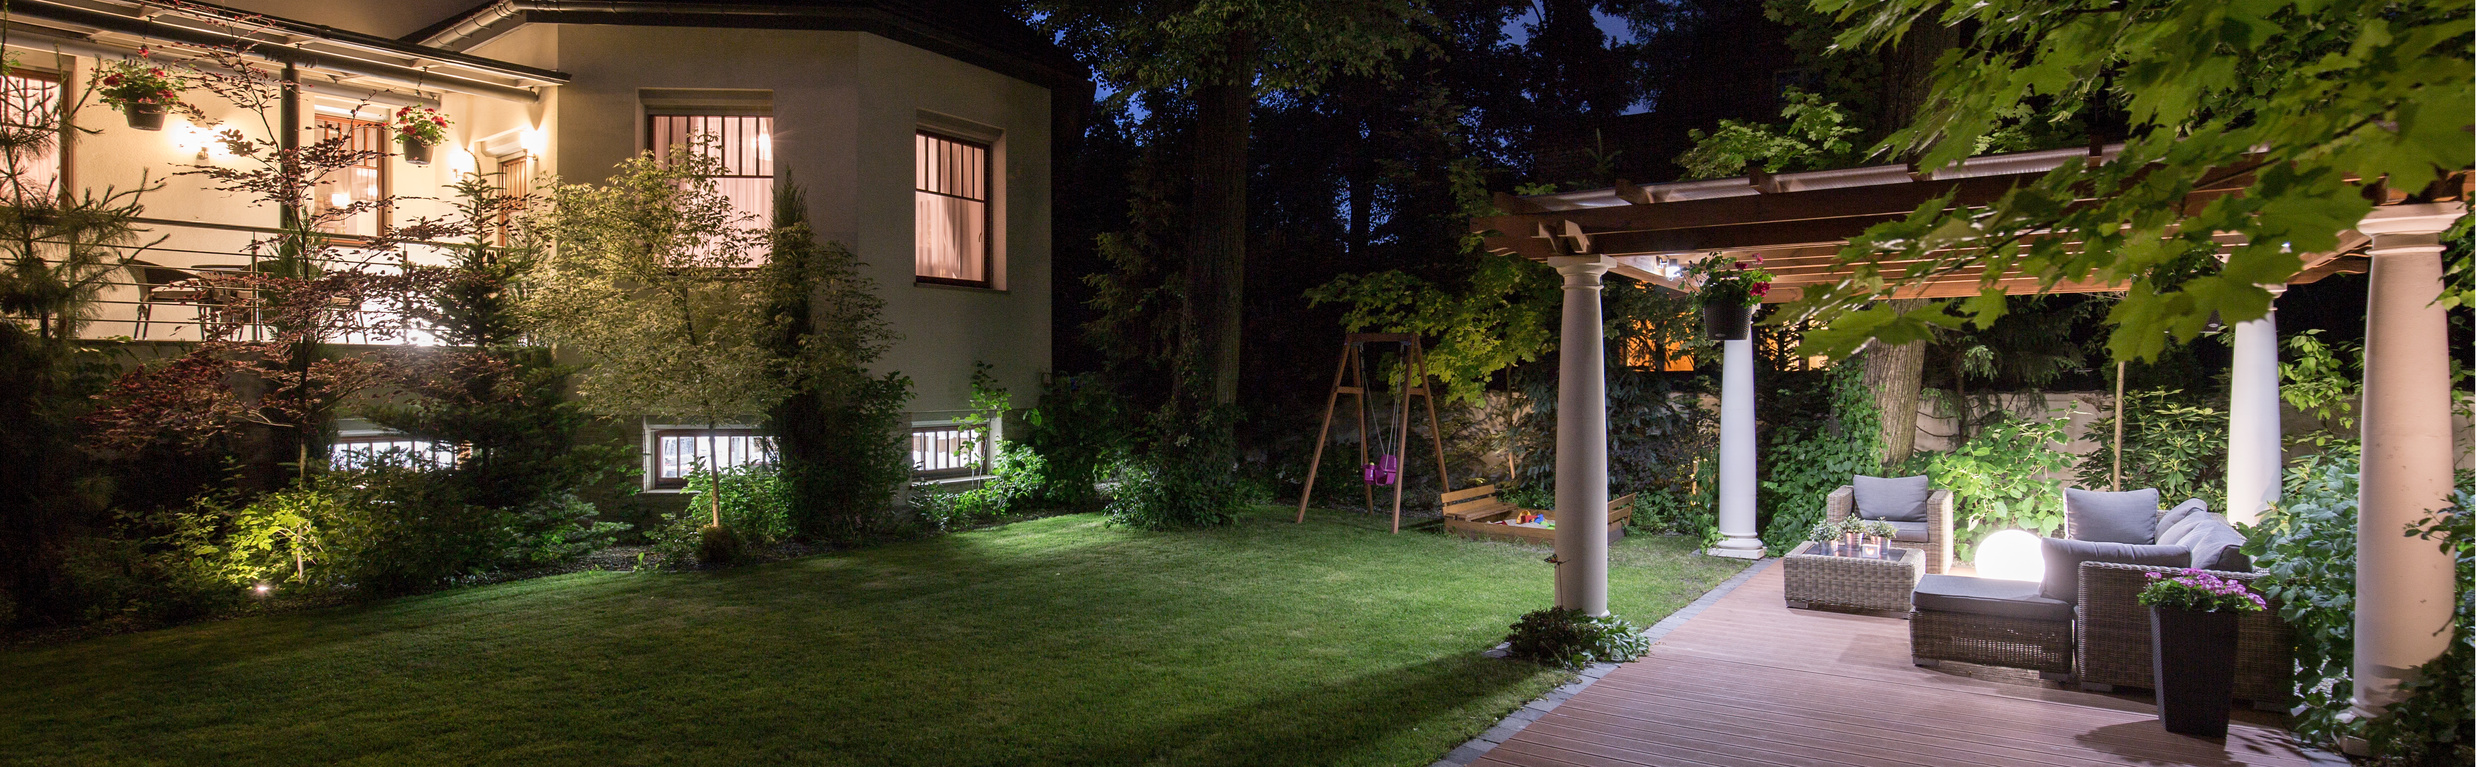 Luxury villa with patio in garden at night